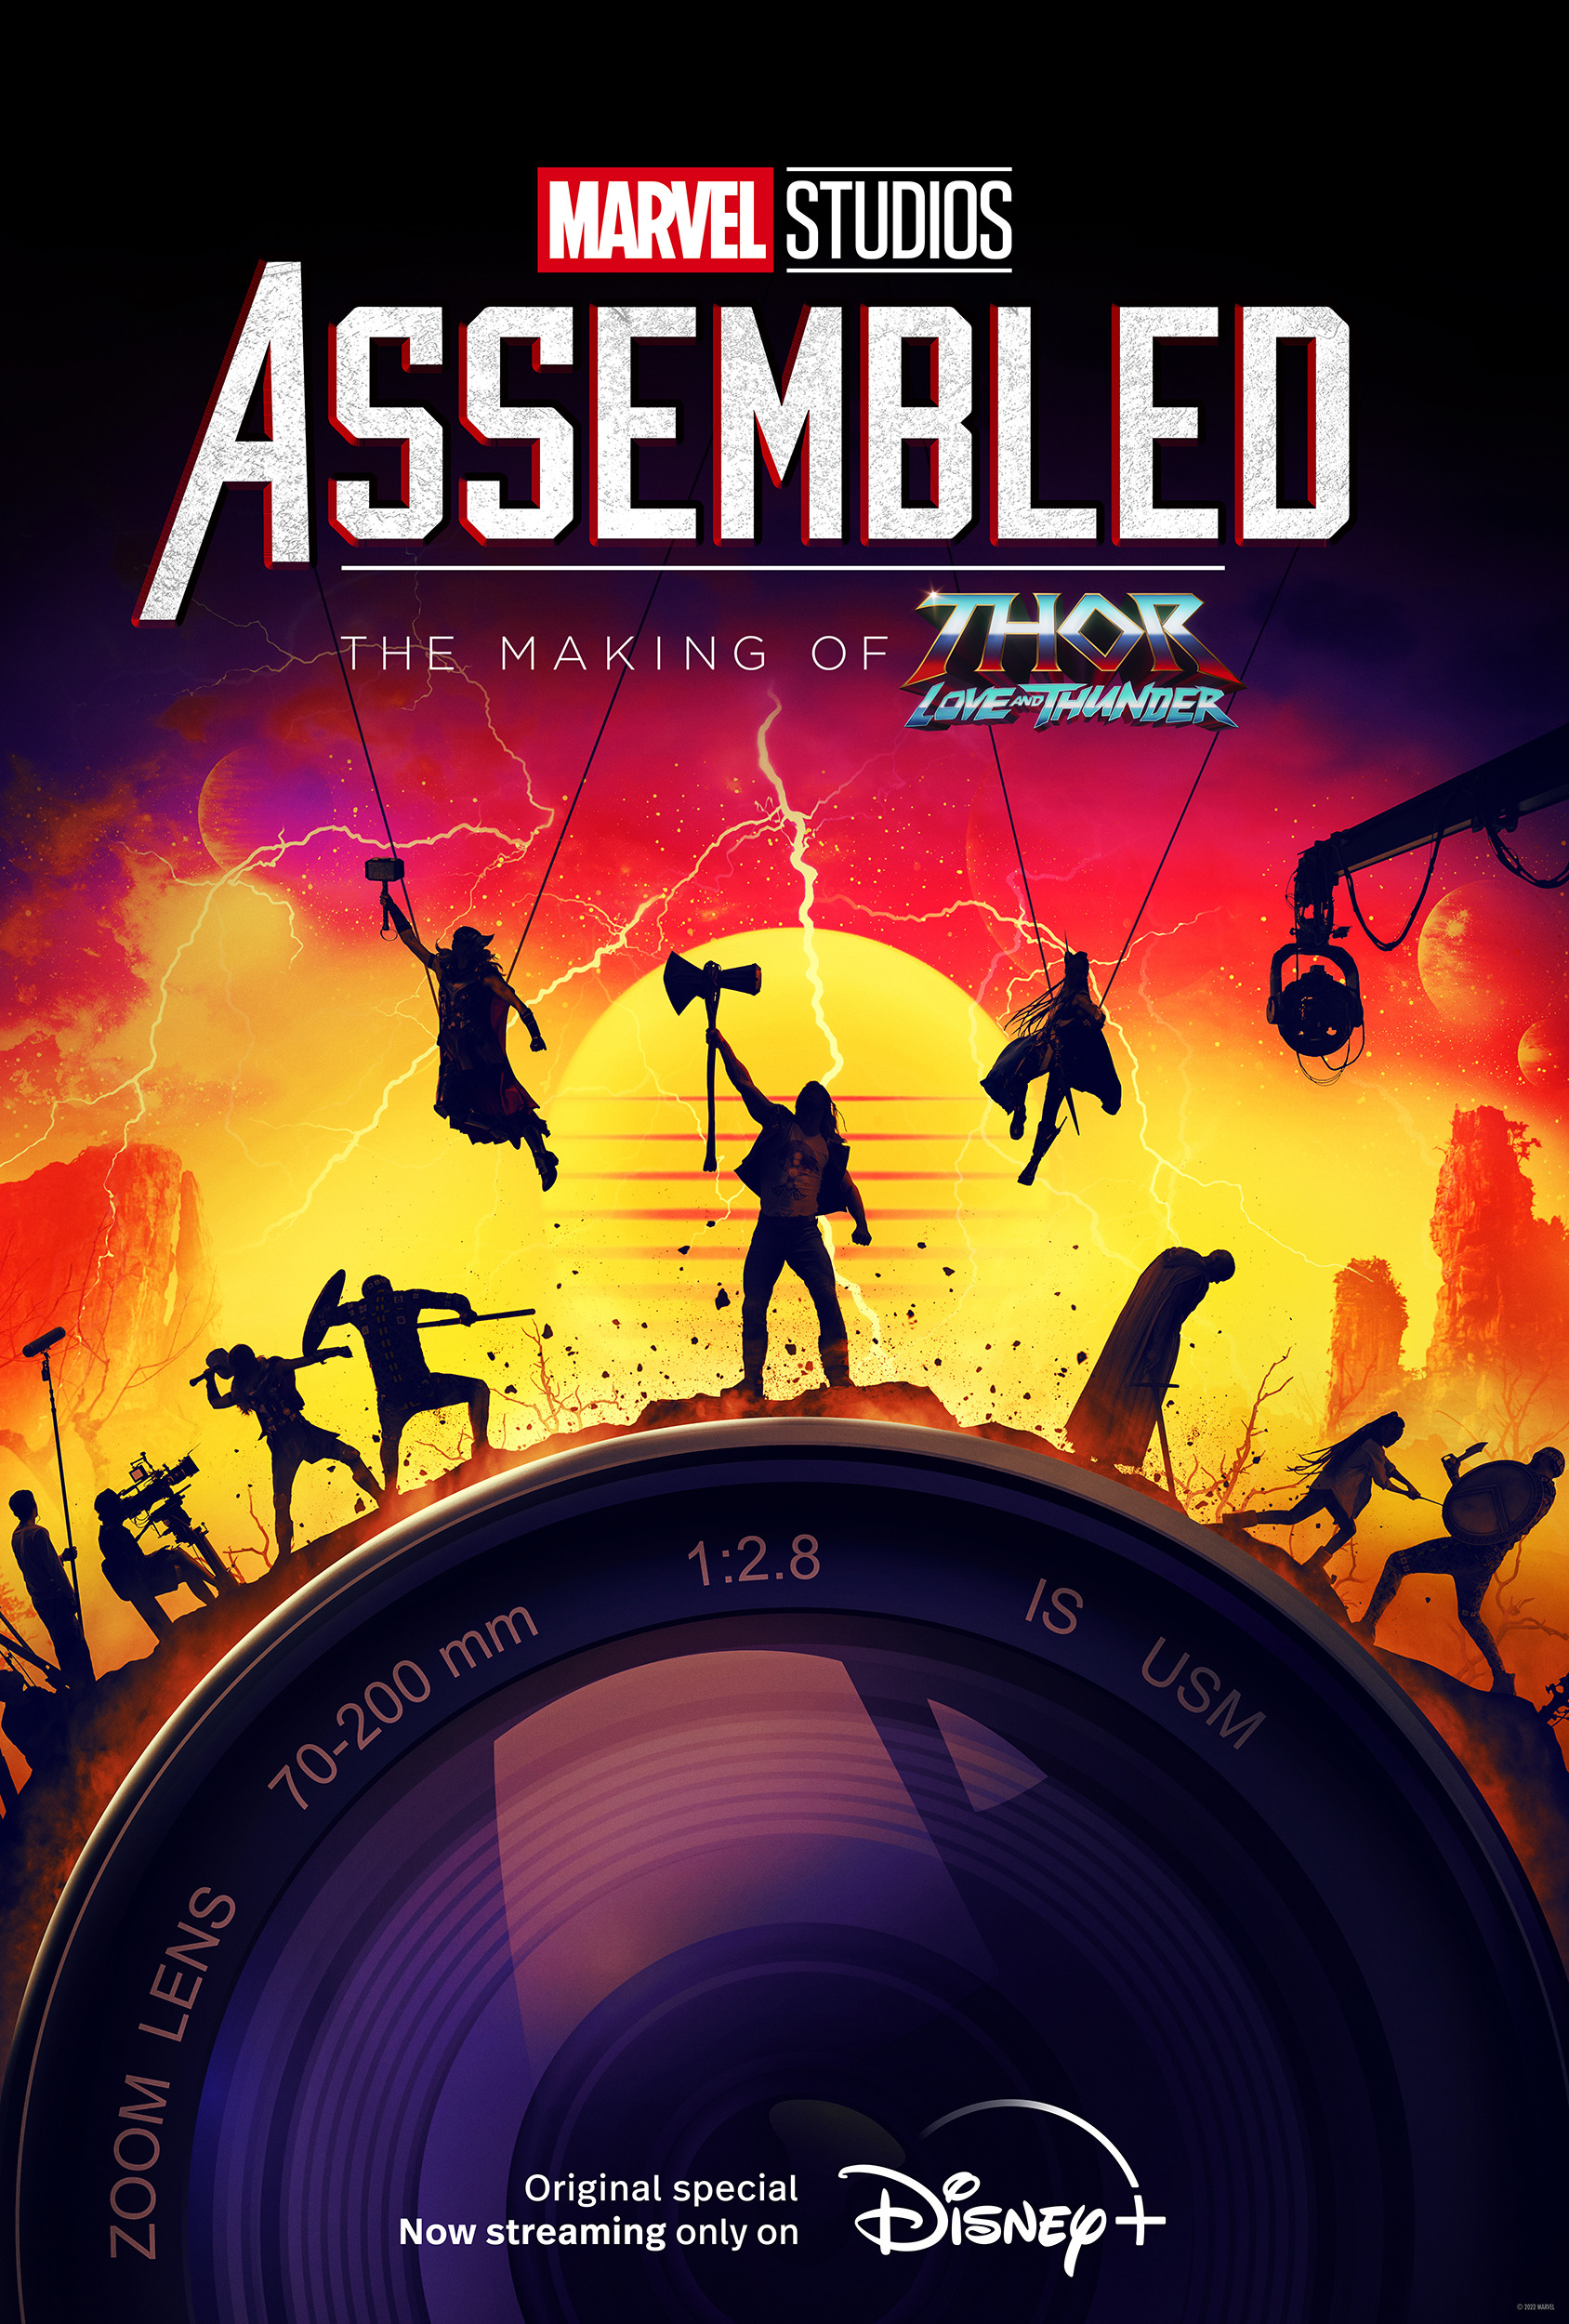 Mega Sized Movie Poster Image for Marvel Studios: Assembled (#12 of 13)